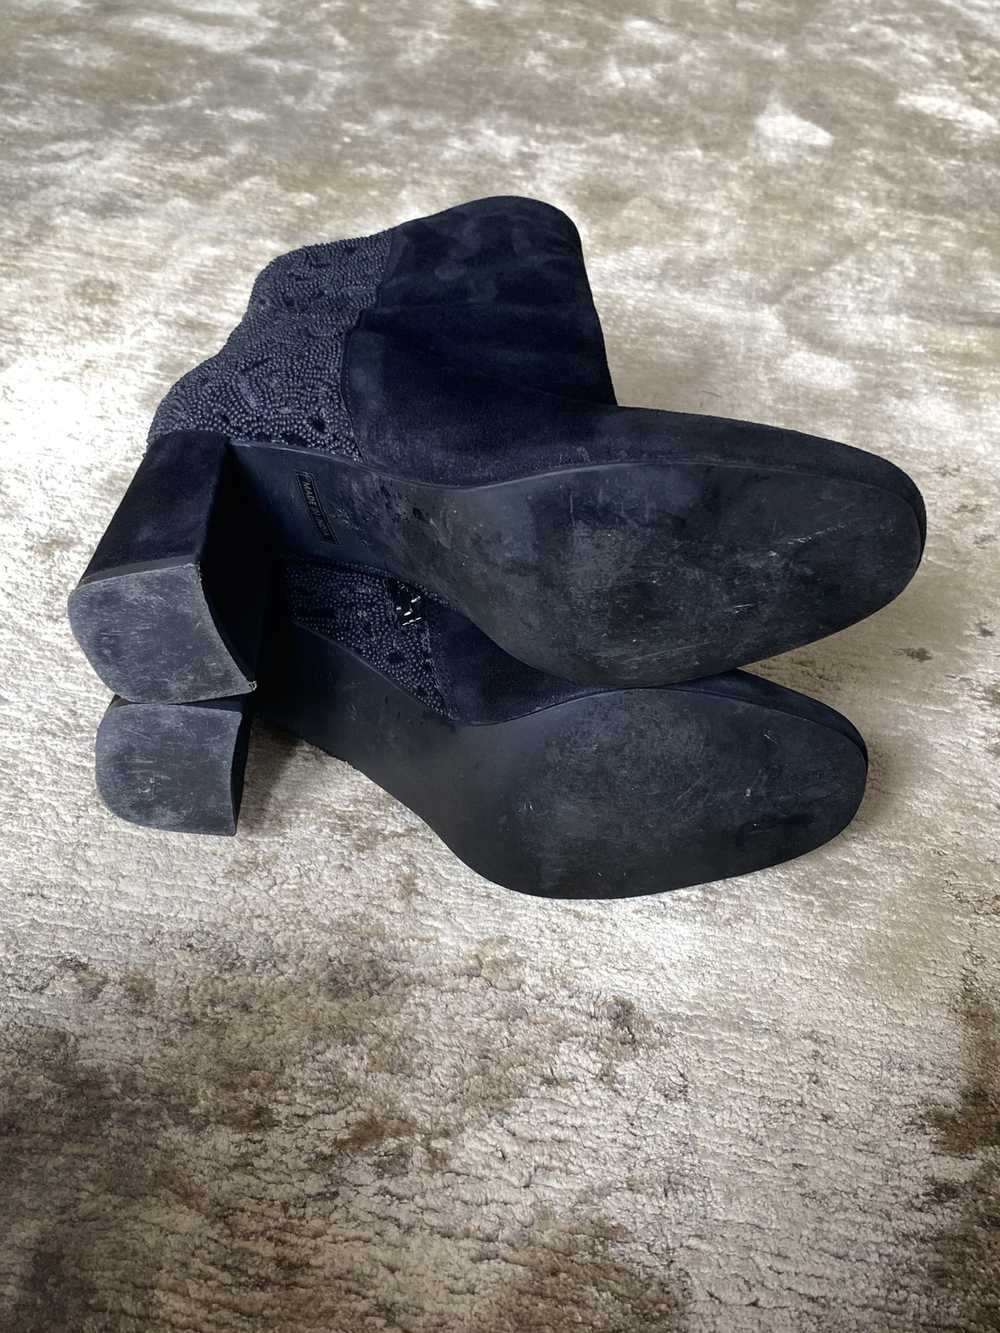 Barneys New York Black Suede/Beaded, Heeled Boots - image 7